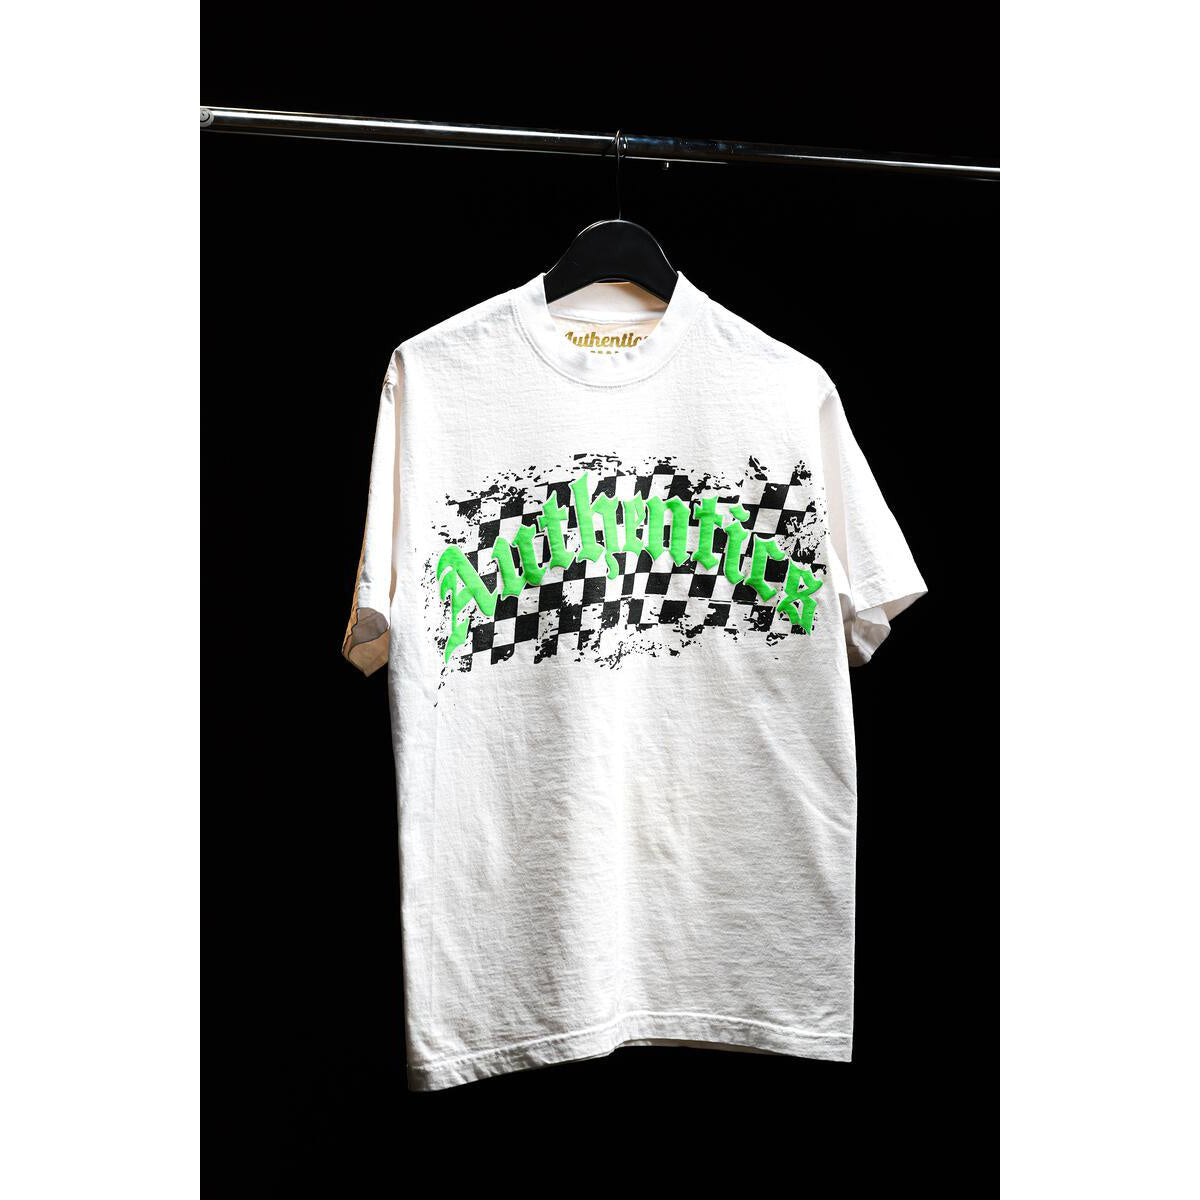 Authentics "Arch Checkered" Tee - White/Neon Green